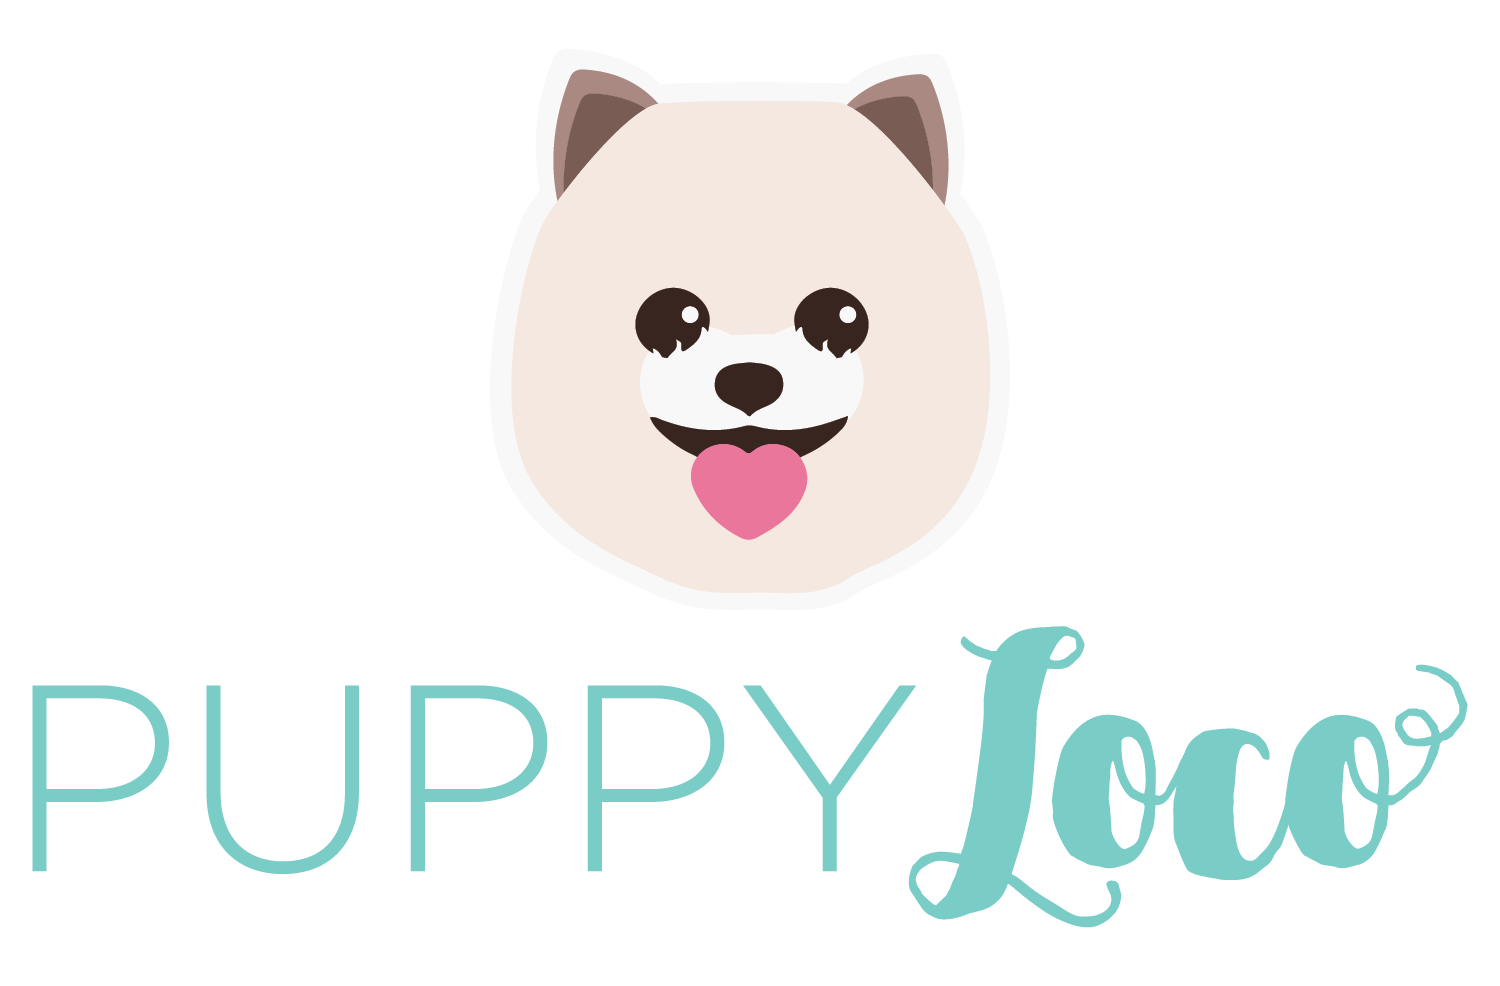  branding &amp; logo created for PuppyLoco 